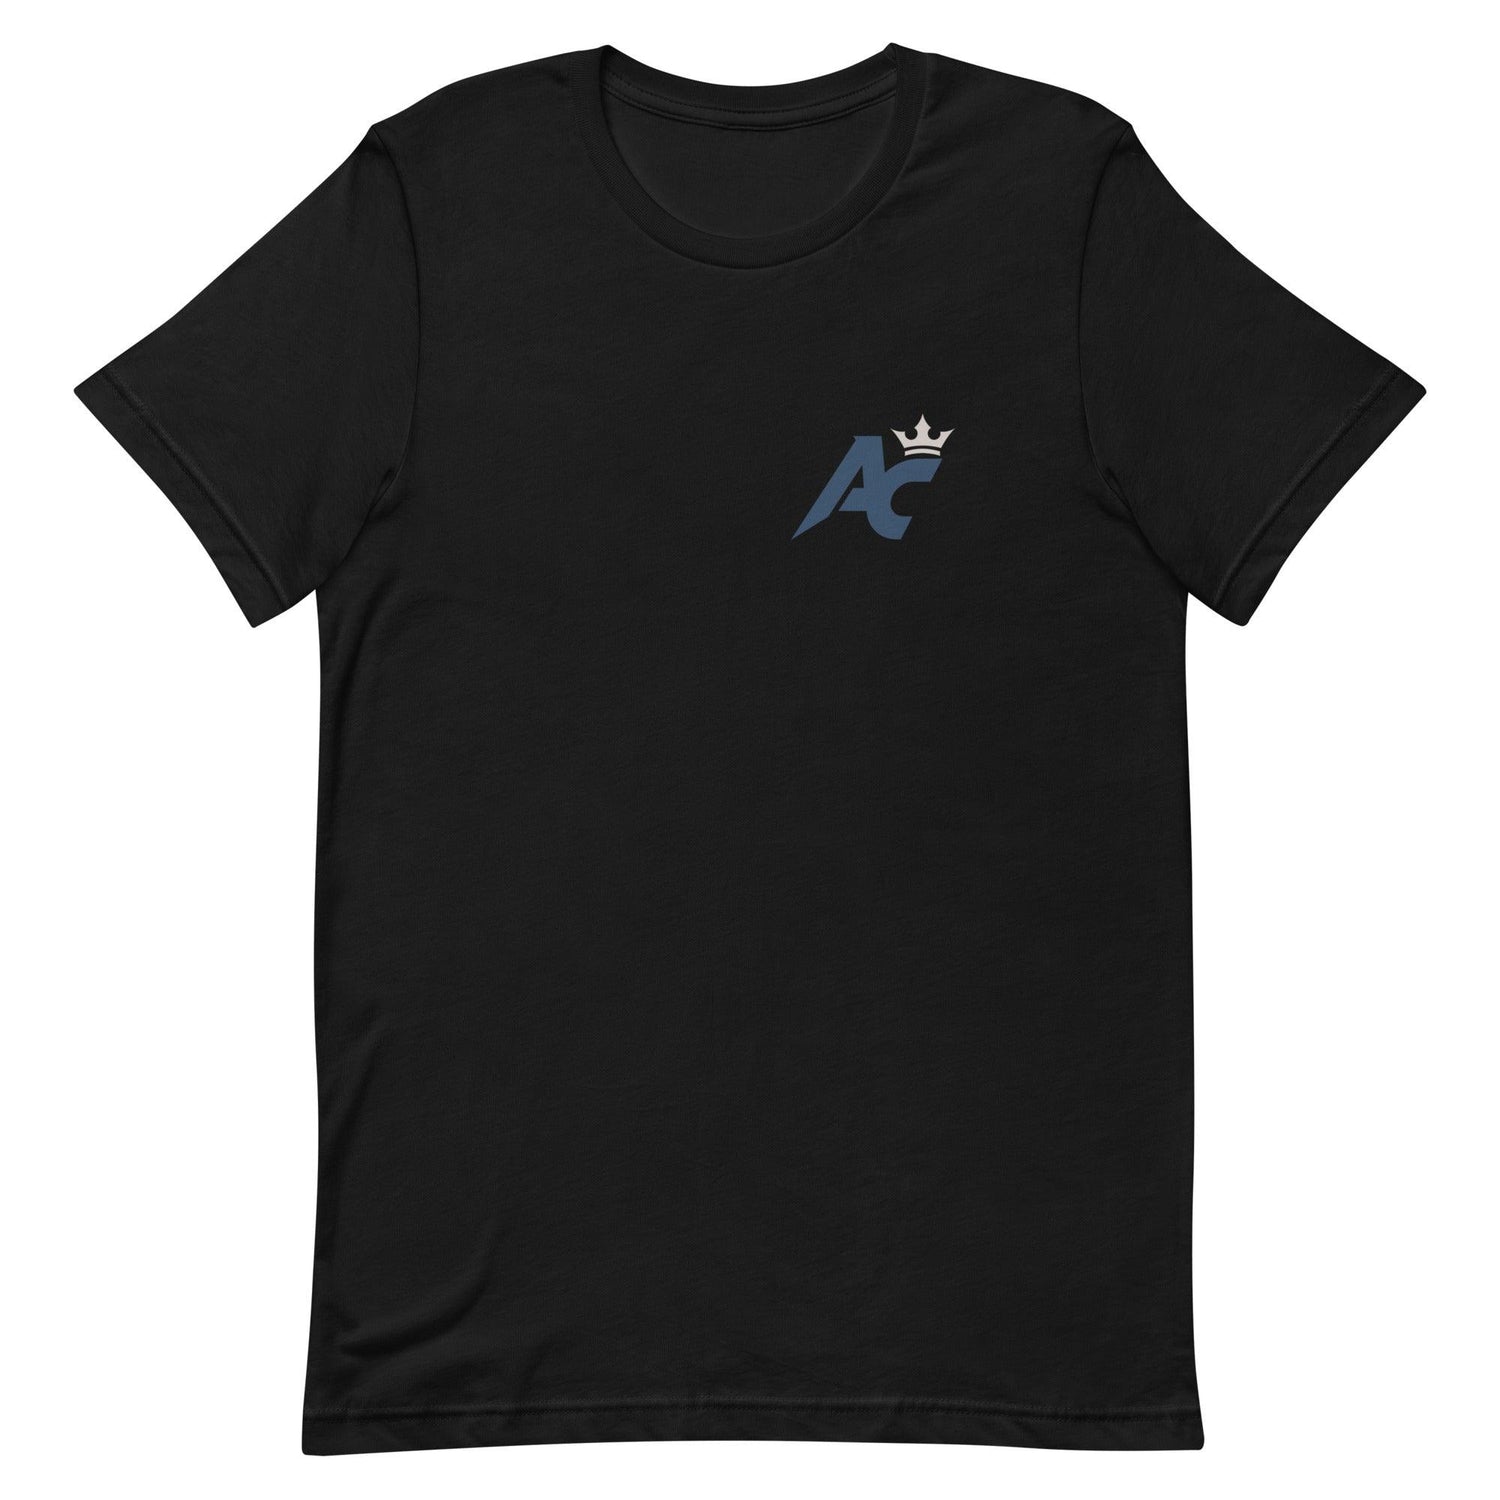 Andrew Ciufo "Elite" t-shirt - Fan Arch